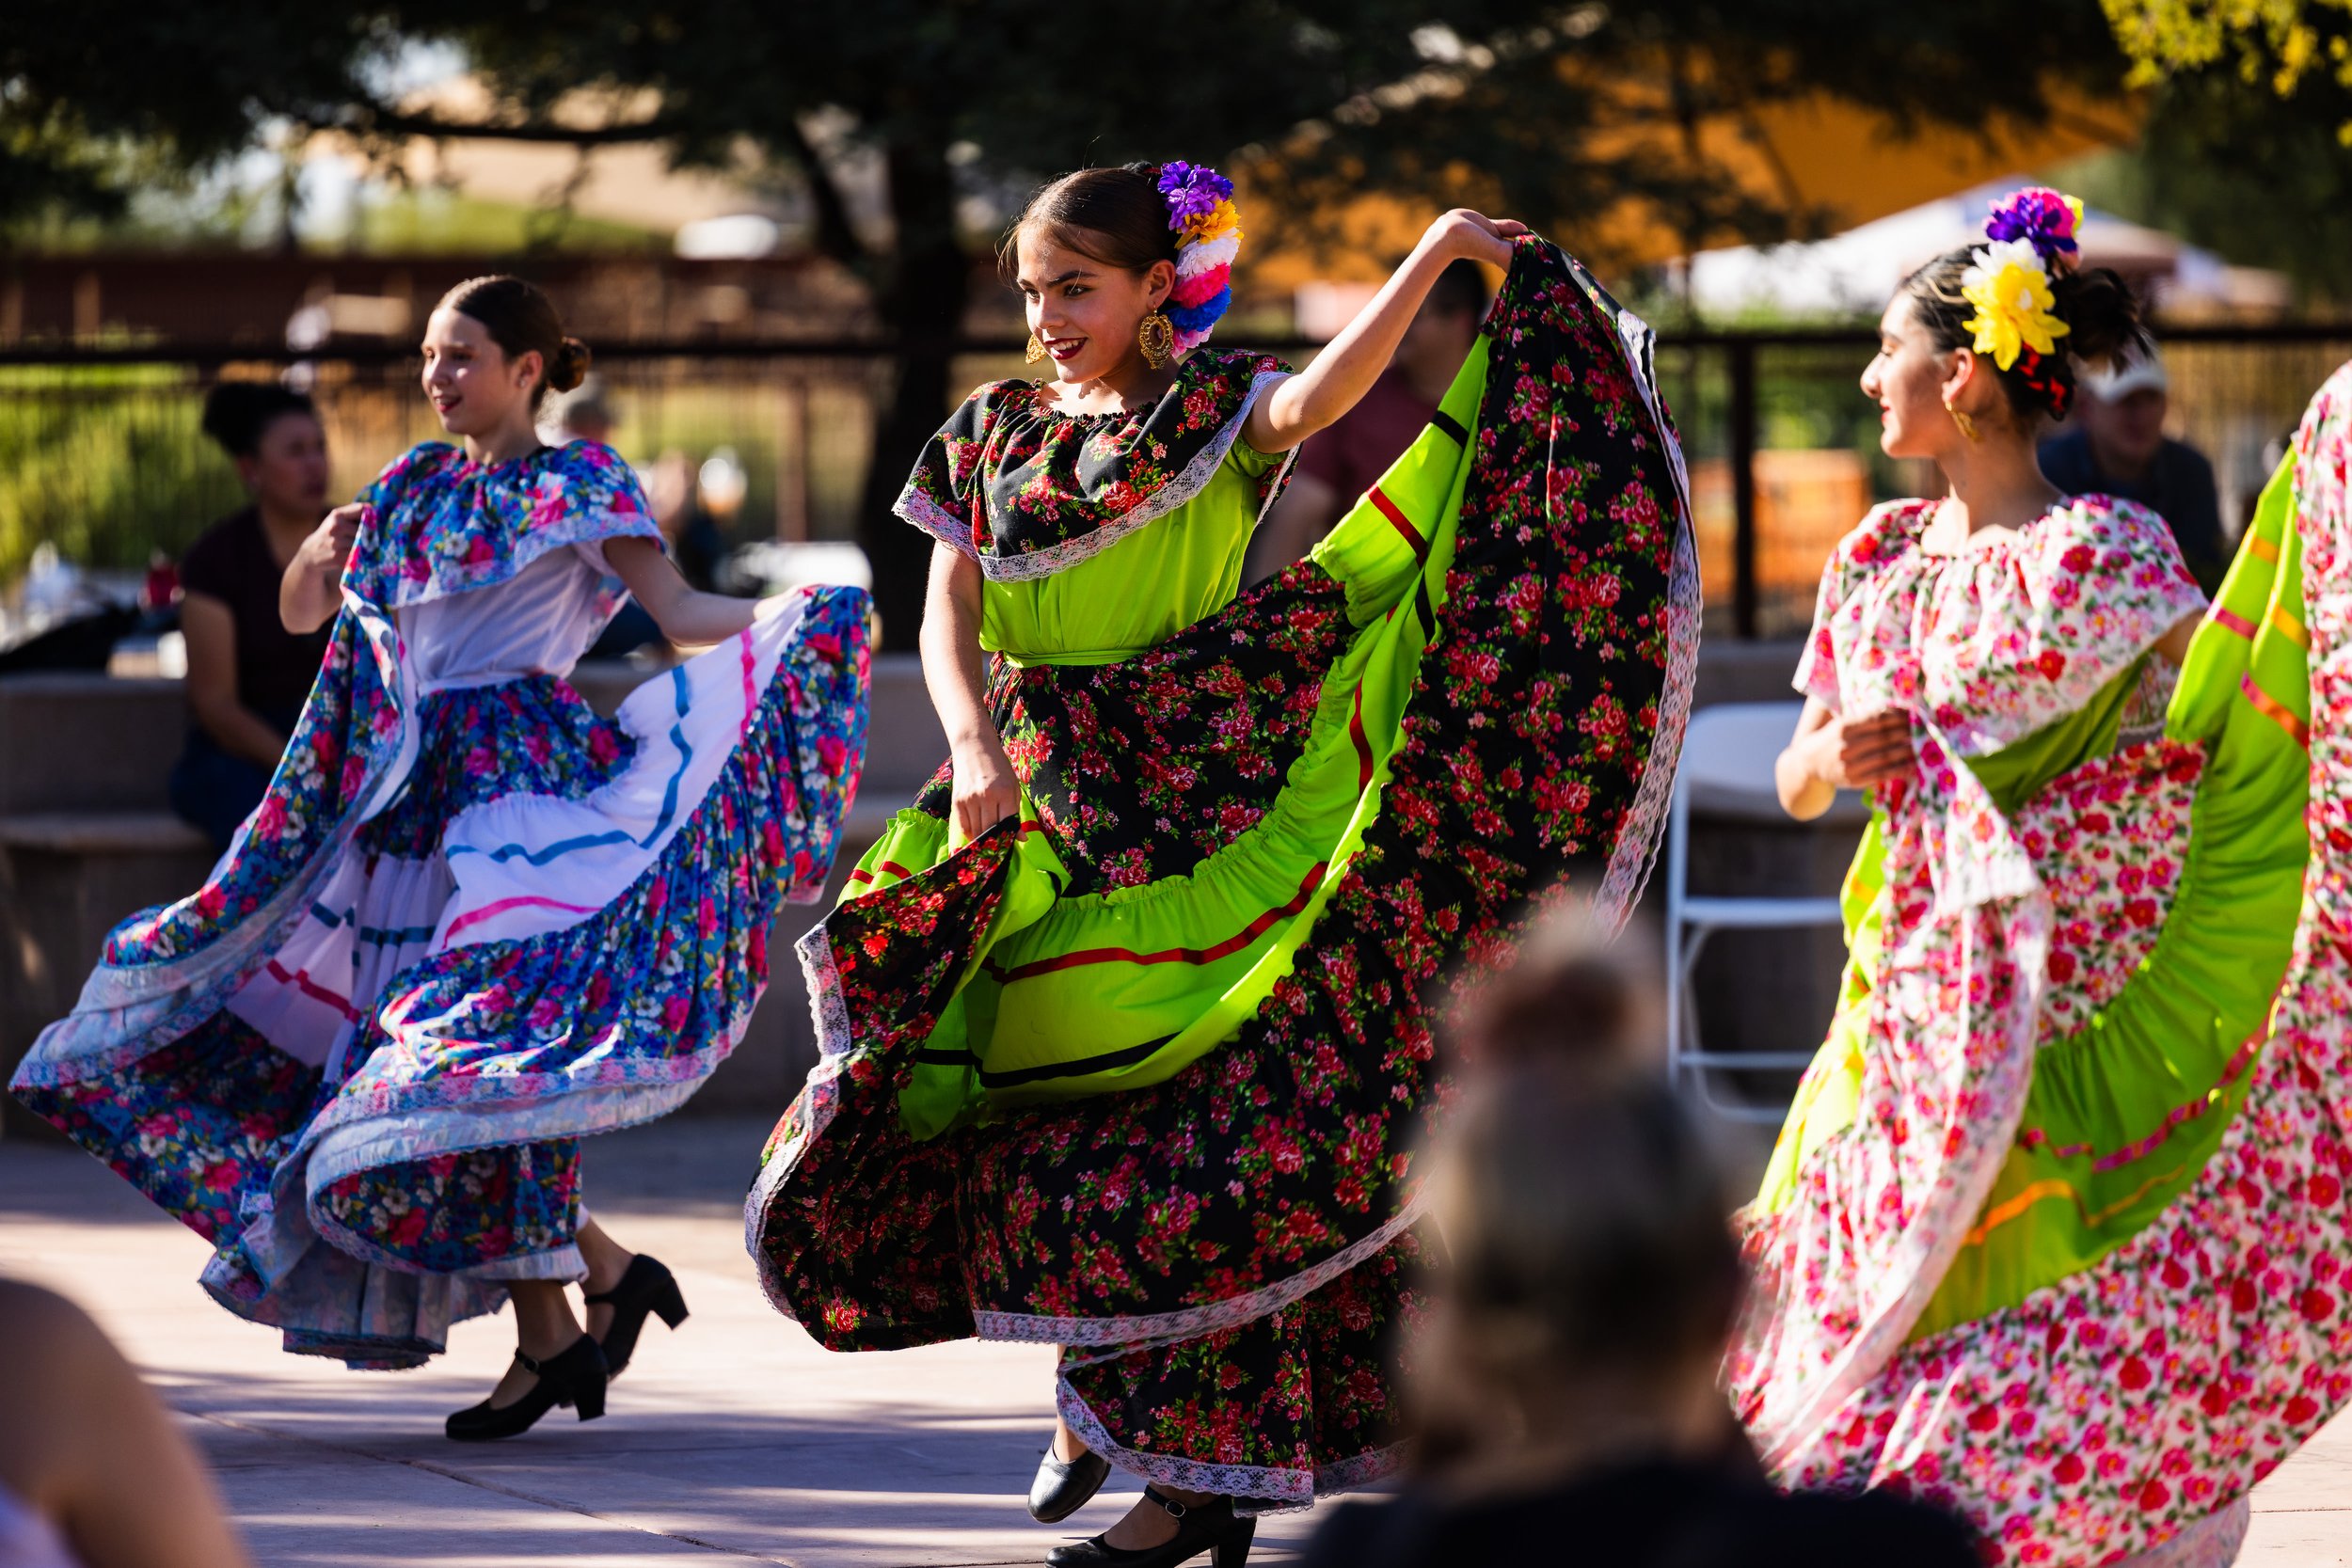  Dance Performances by Compañía de Danza Folklórica Arizona 